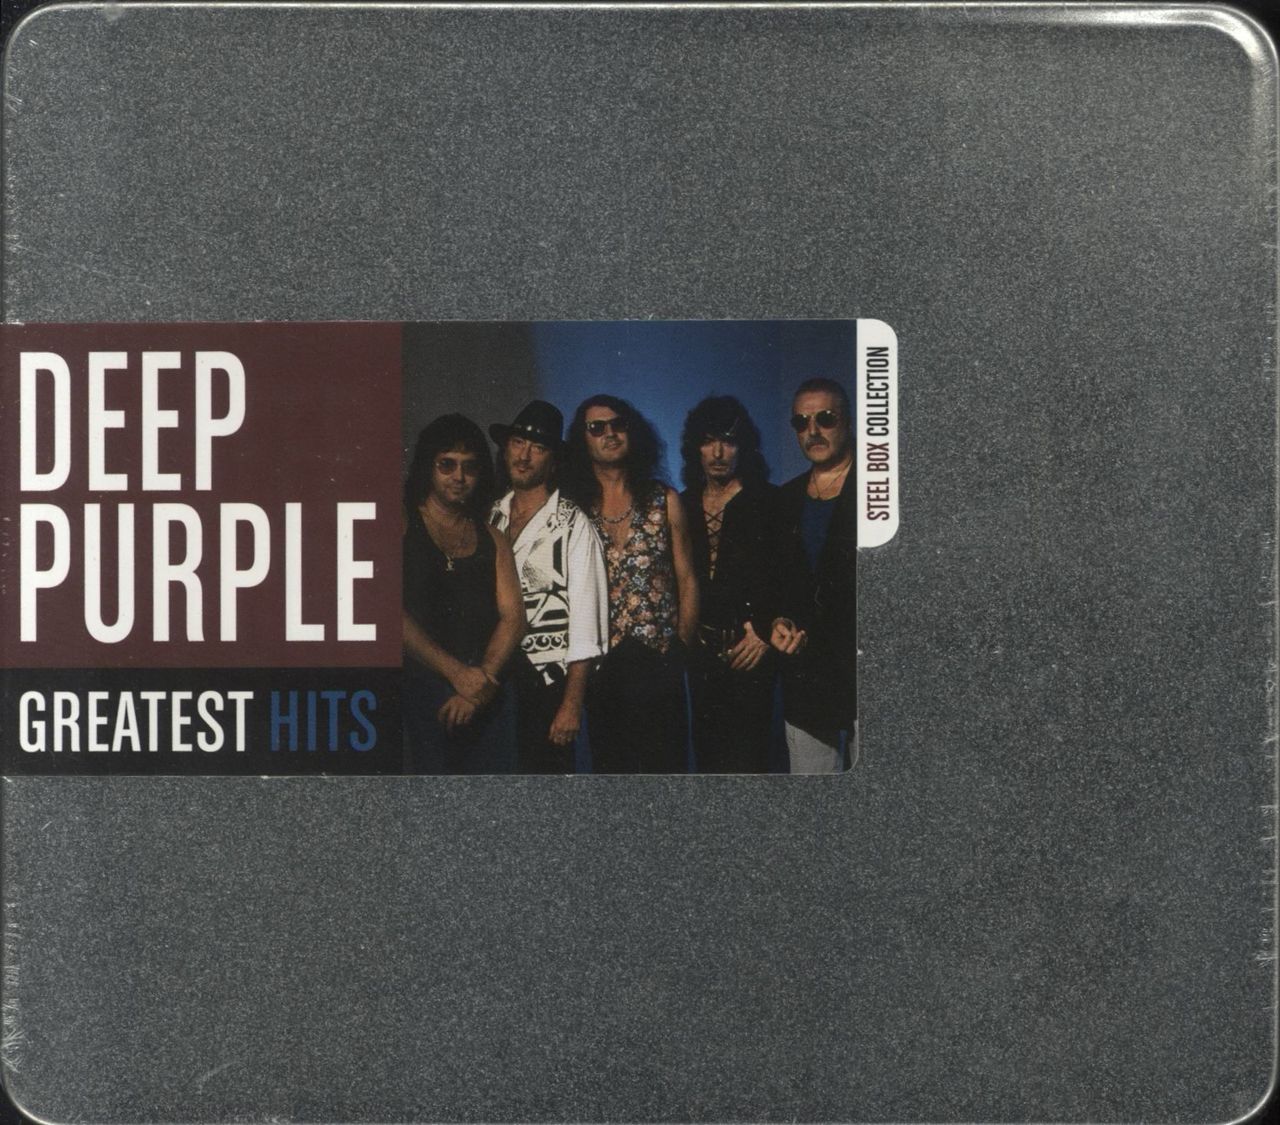 Deep Purple Greatest Hits German CD album — RareVinyl.com